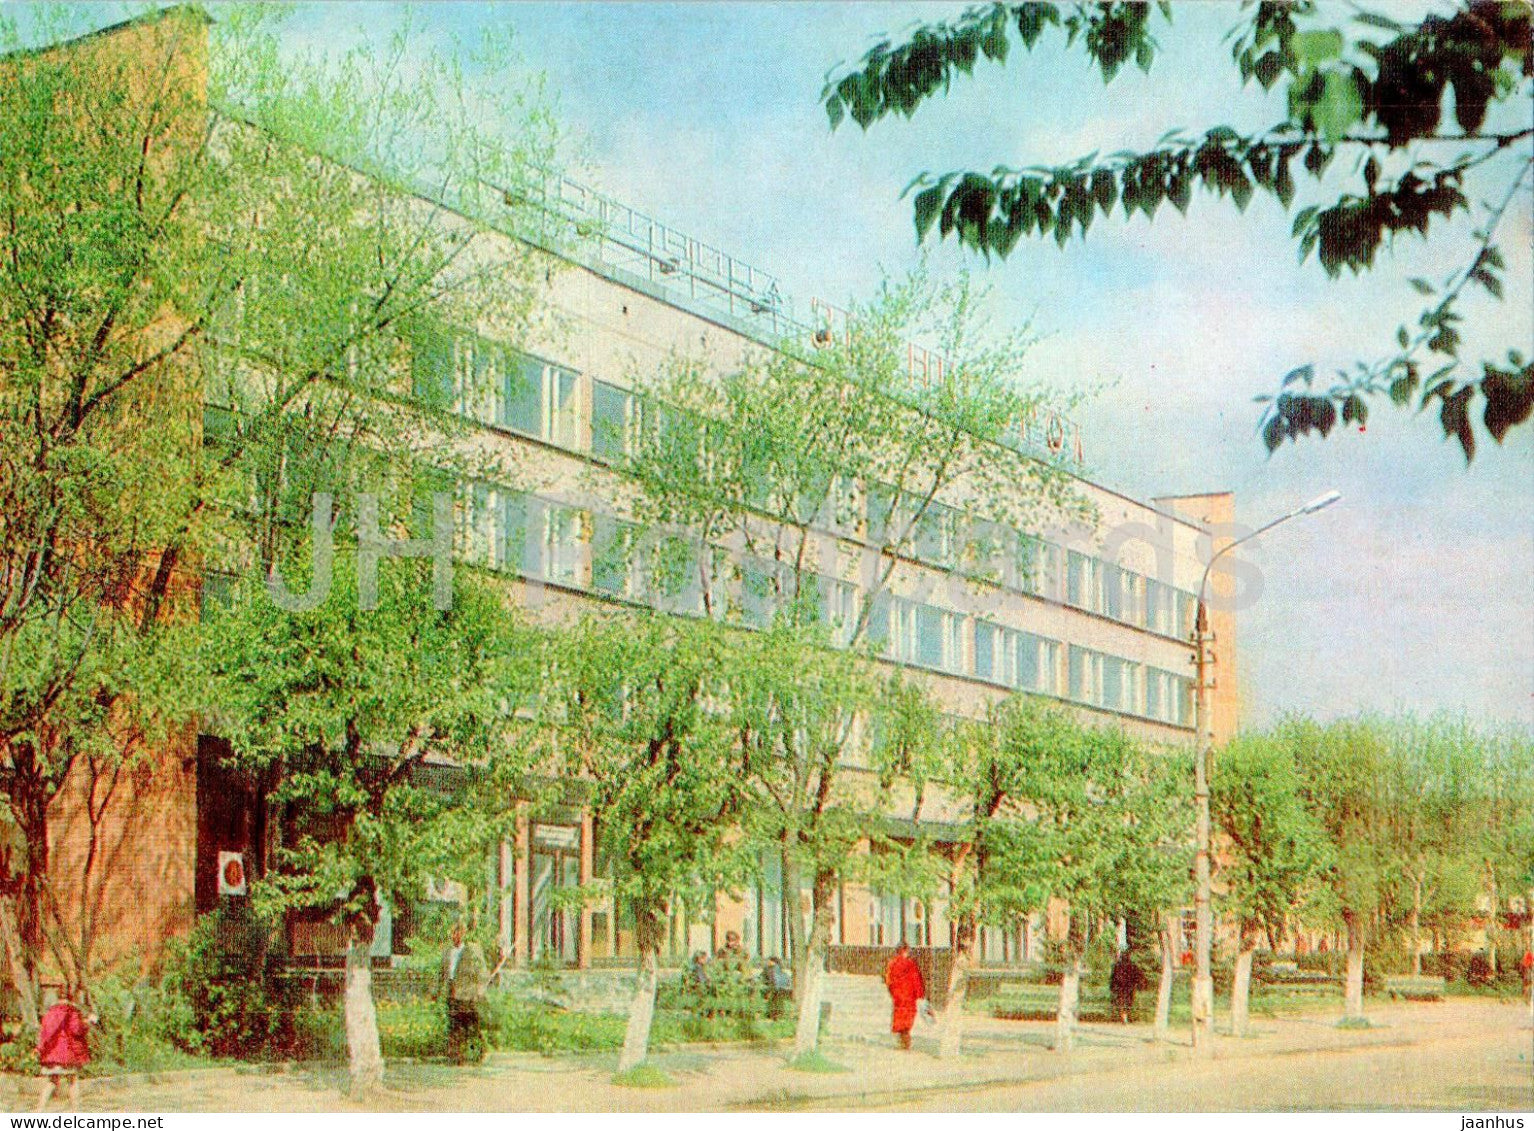 Zvenigorod - Hotel in Moskovskaya street - 1983 - Russia USSR - unused - JH Postcards